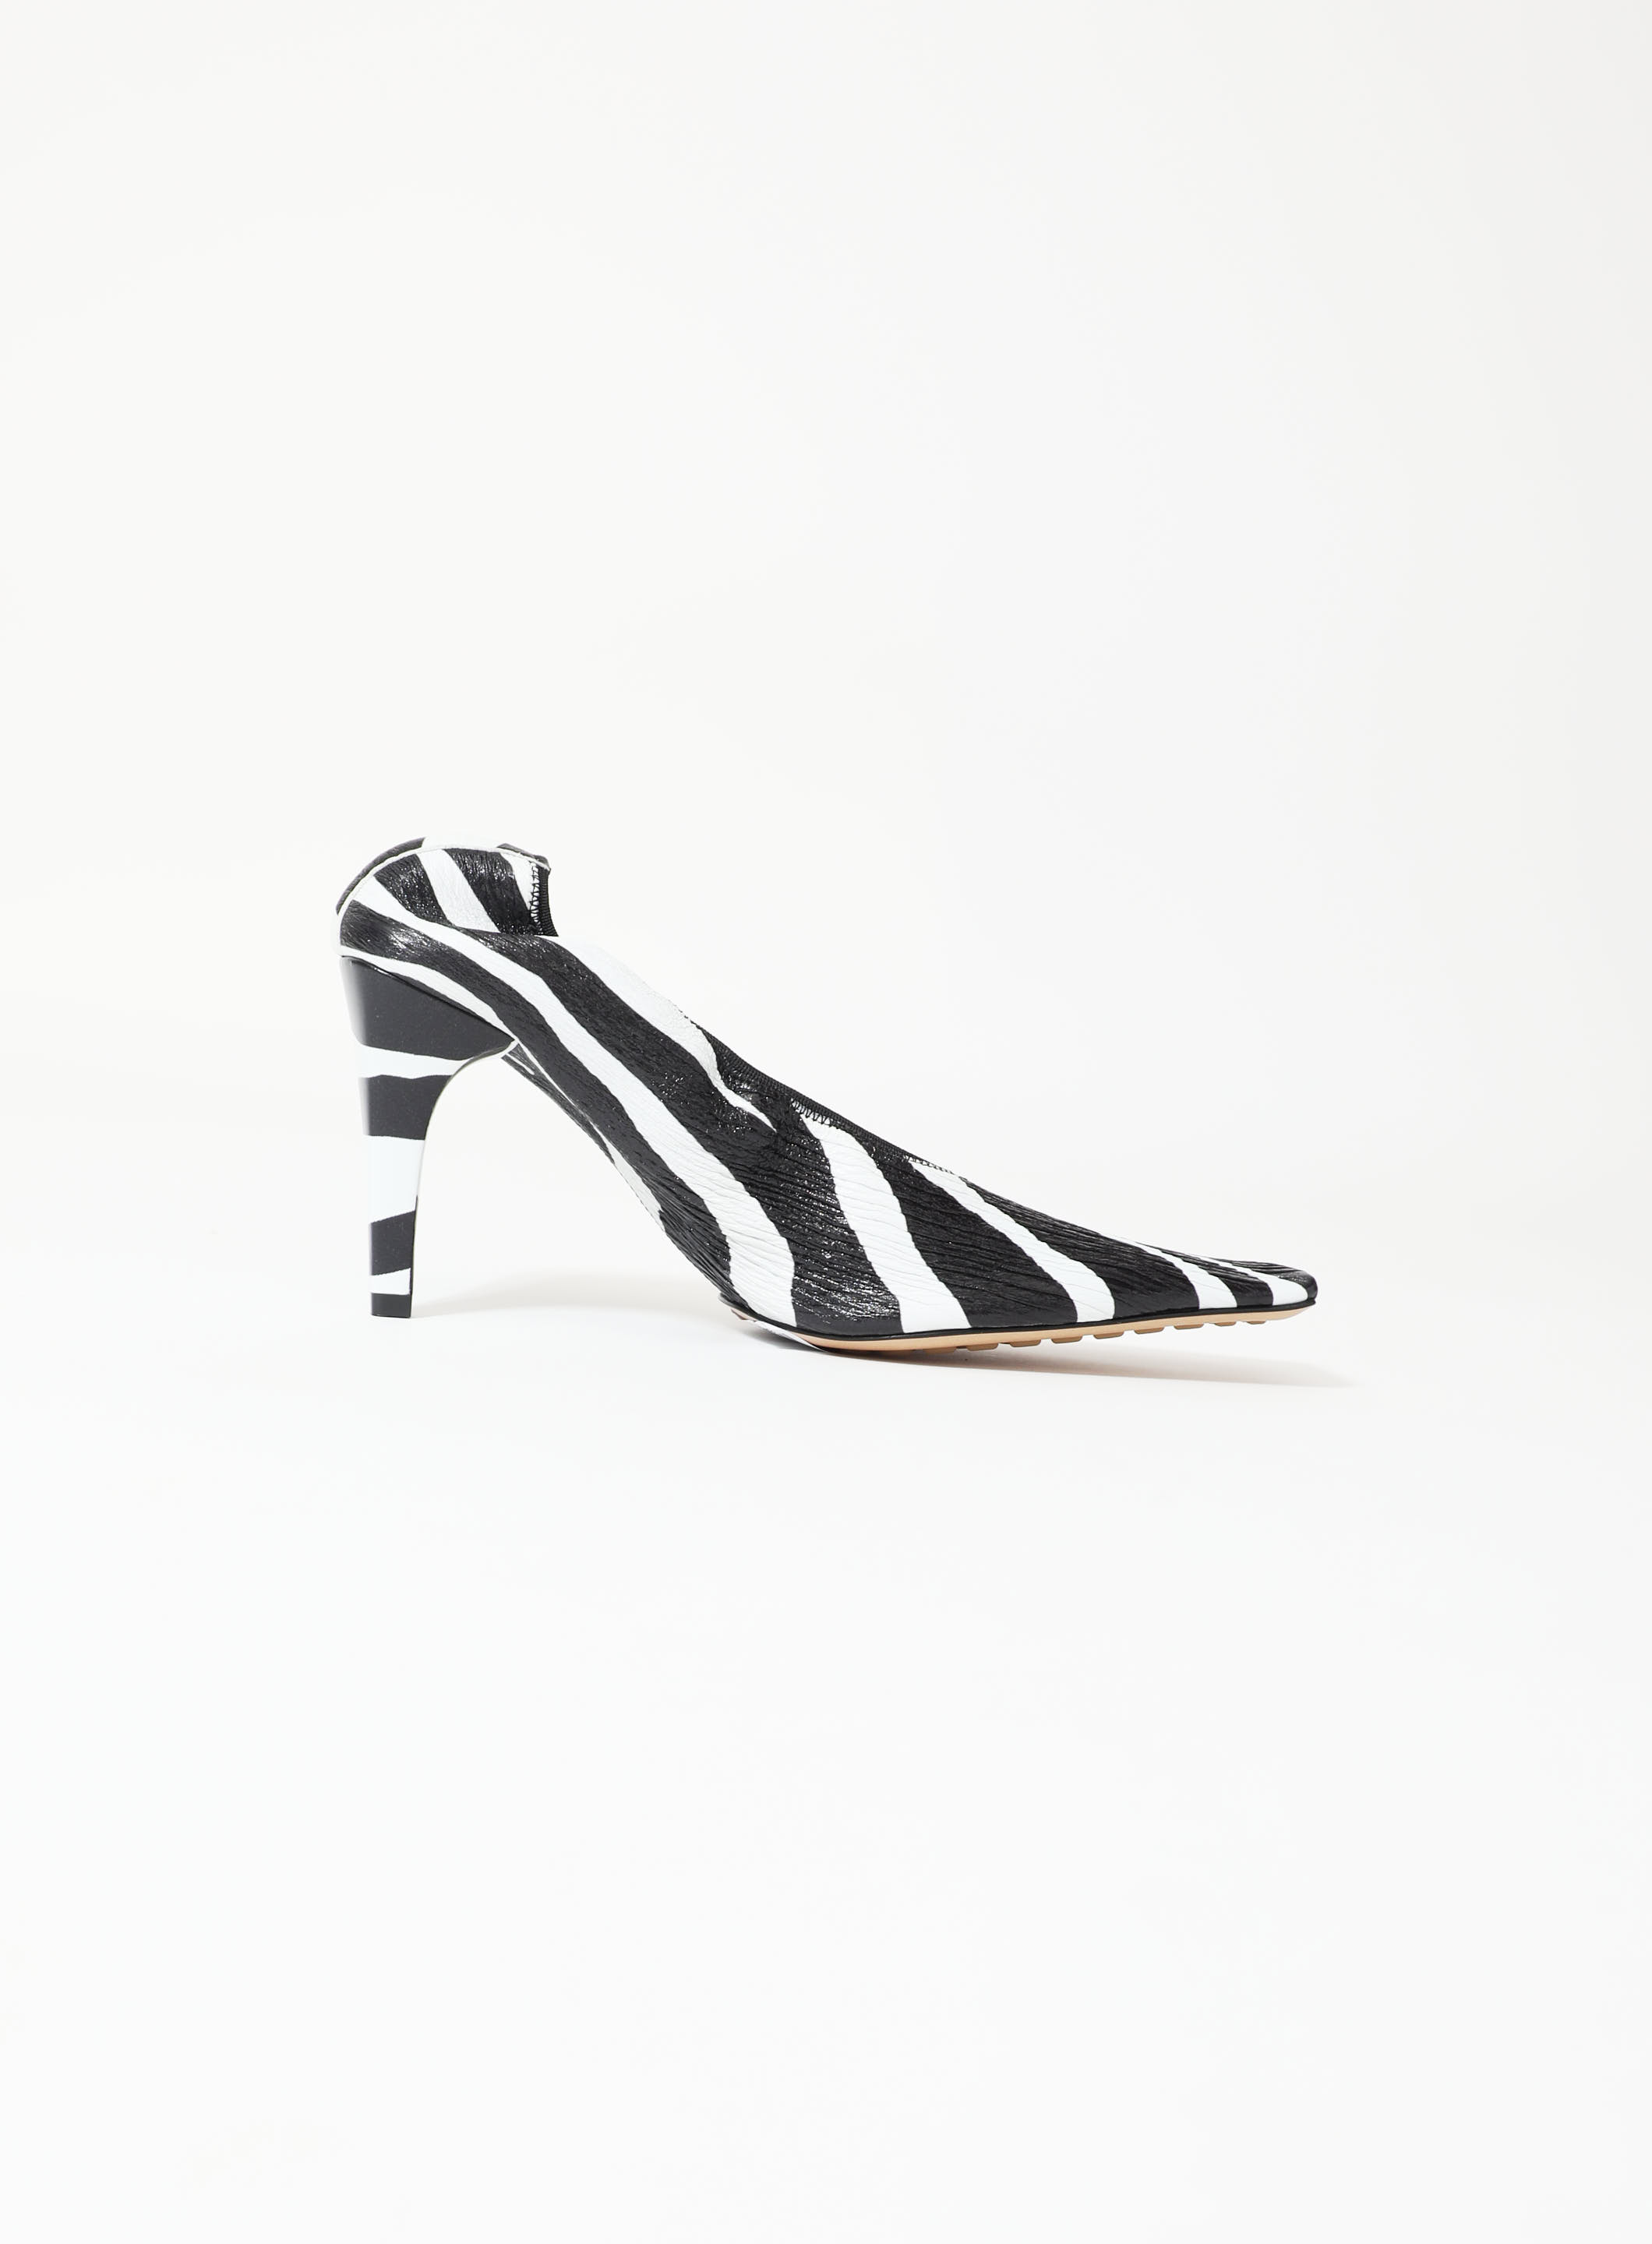 High Heels Shoes,zebra Design Stock Photo - Image of beauty, mountain:  23932598